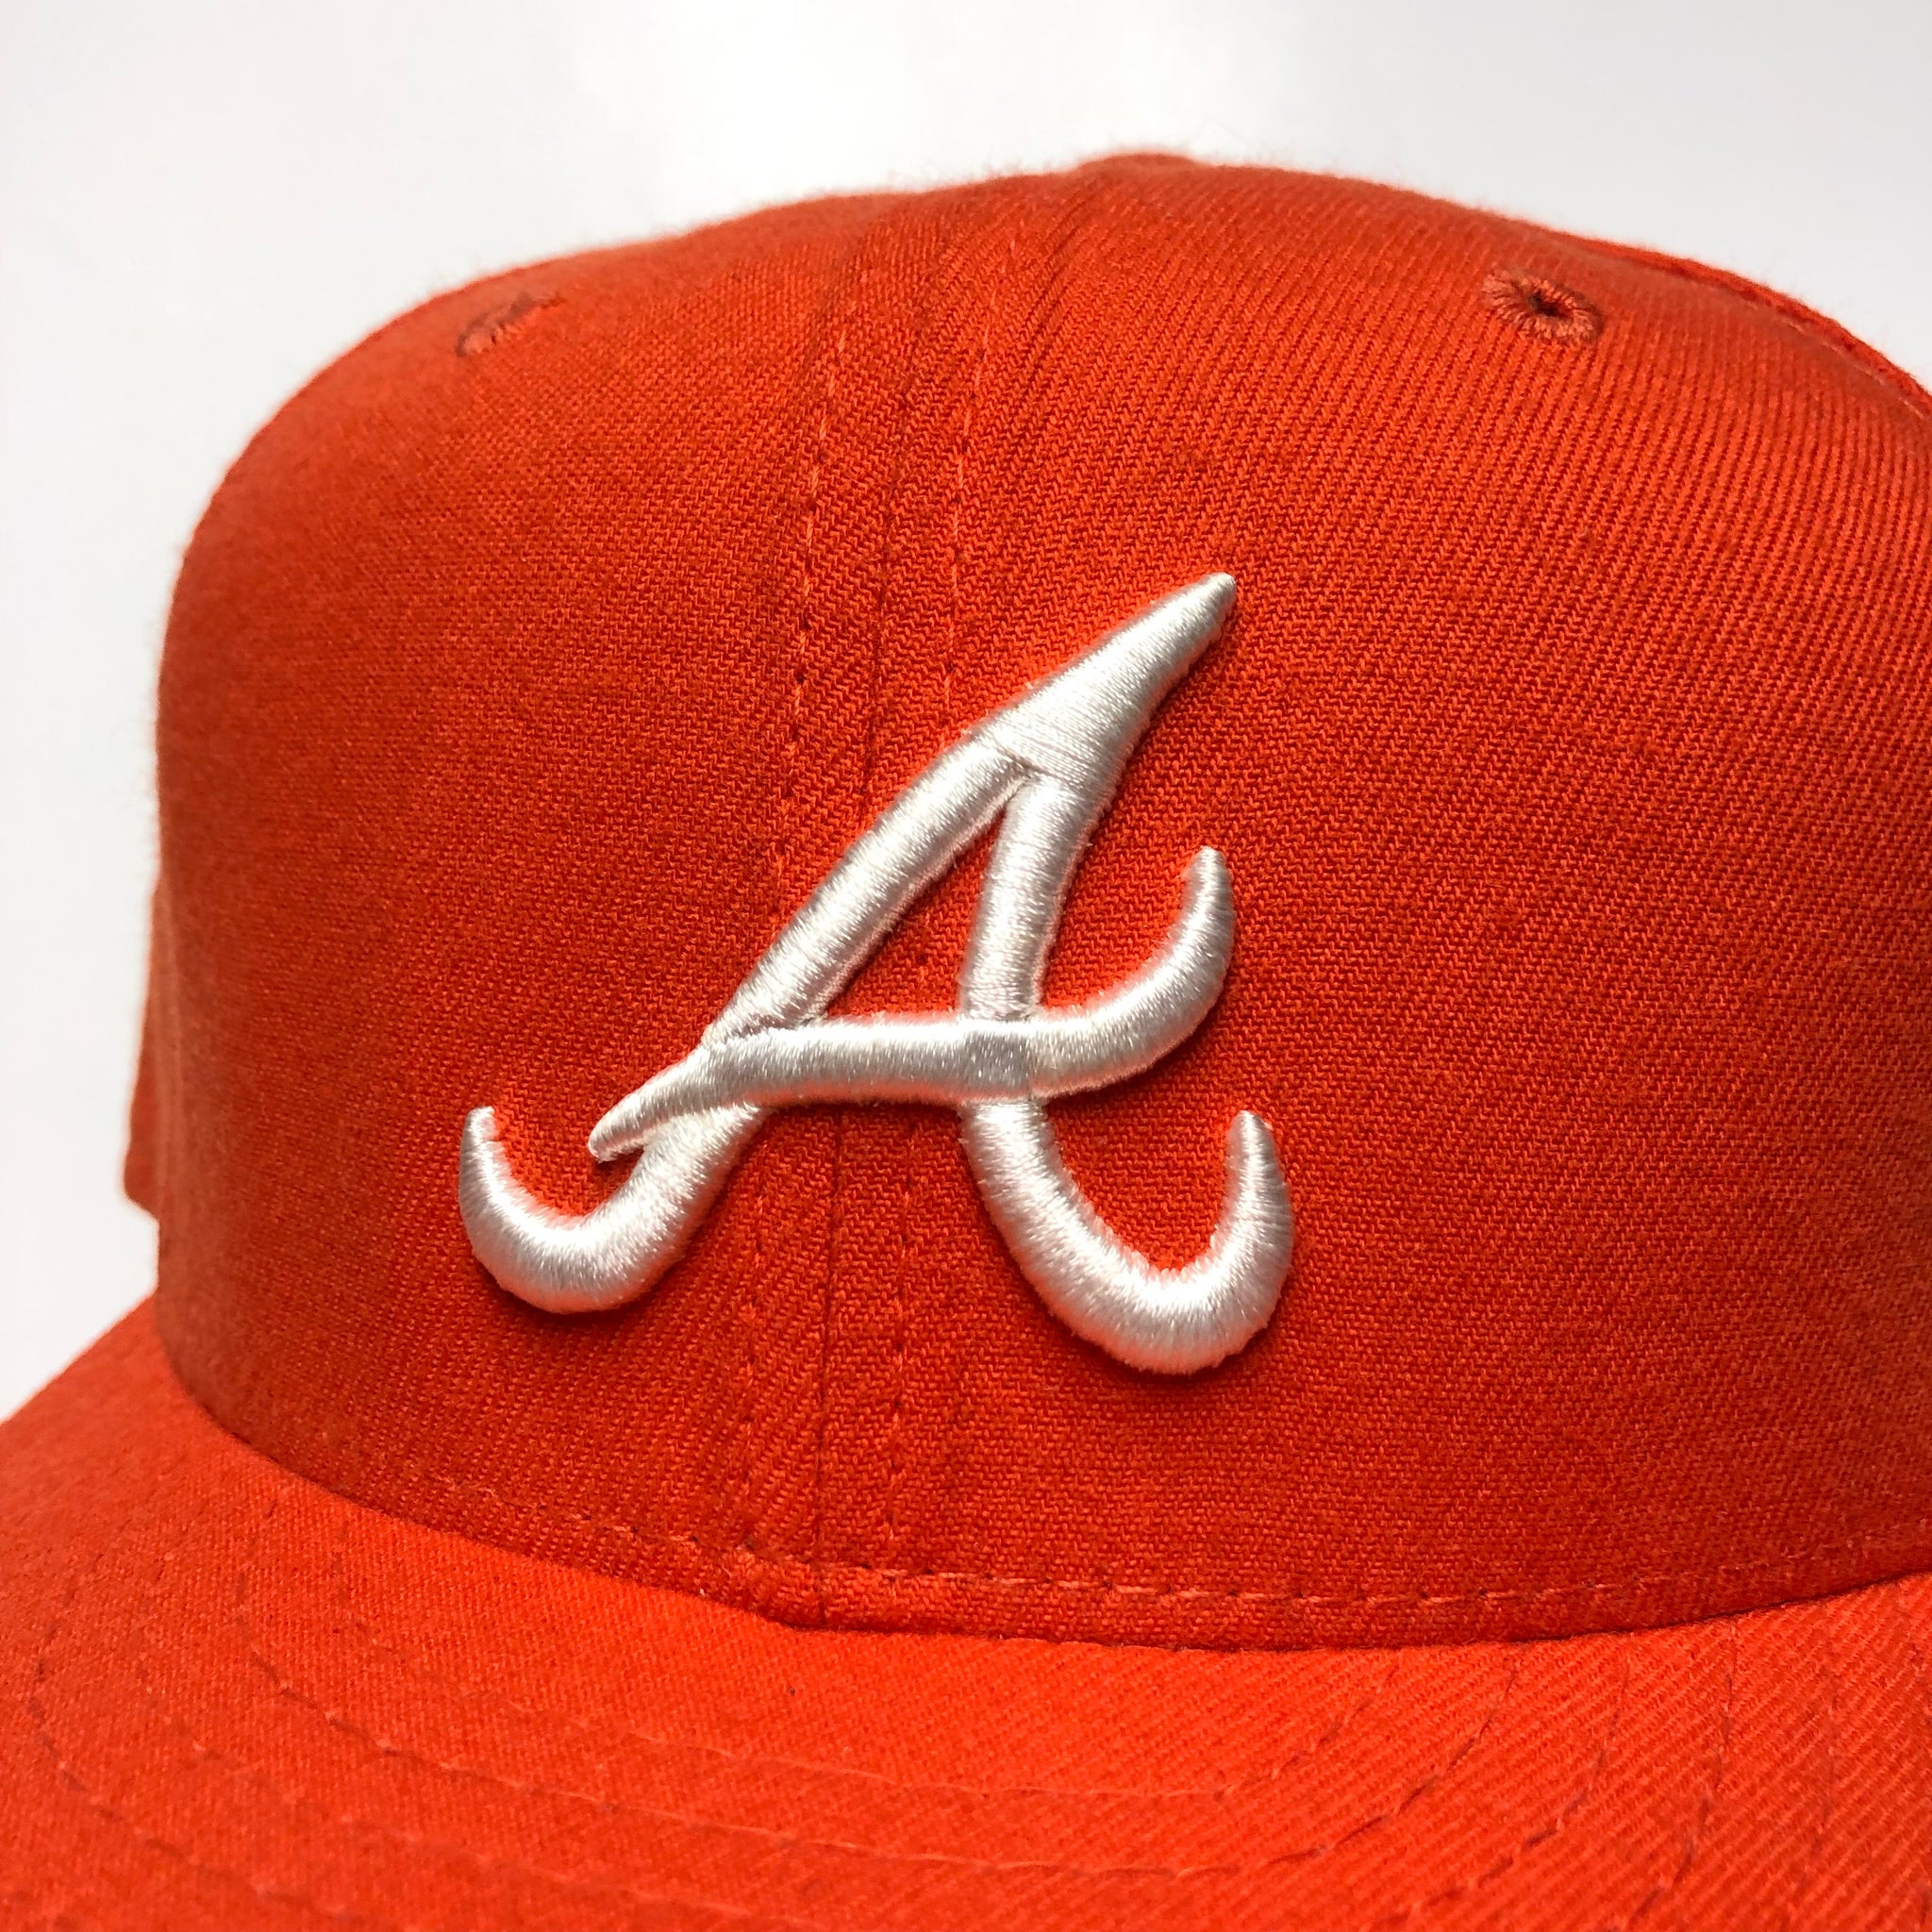 Vintage Atlanta Braves Clothing, Braves Retro Shirts, Vintage Hats &  Apparel